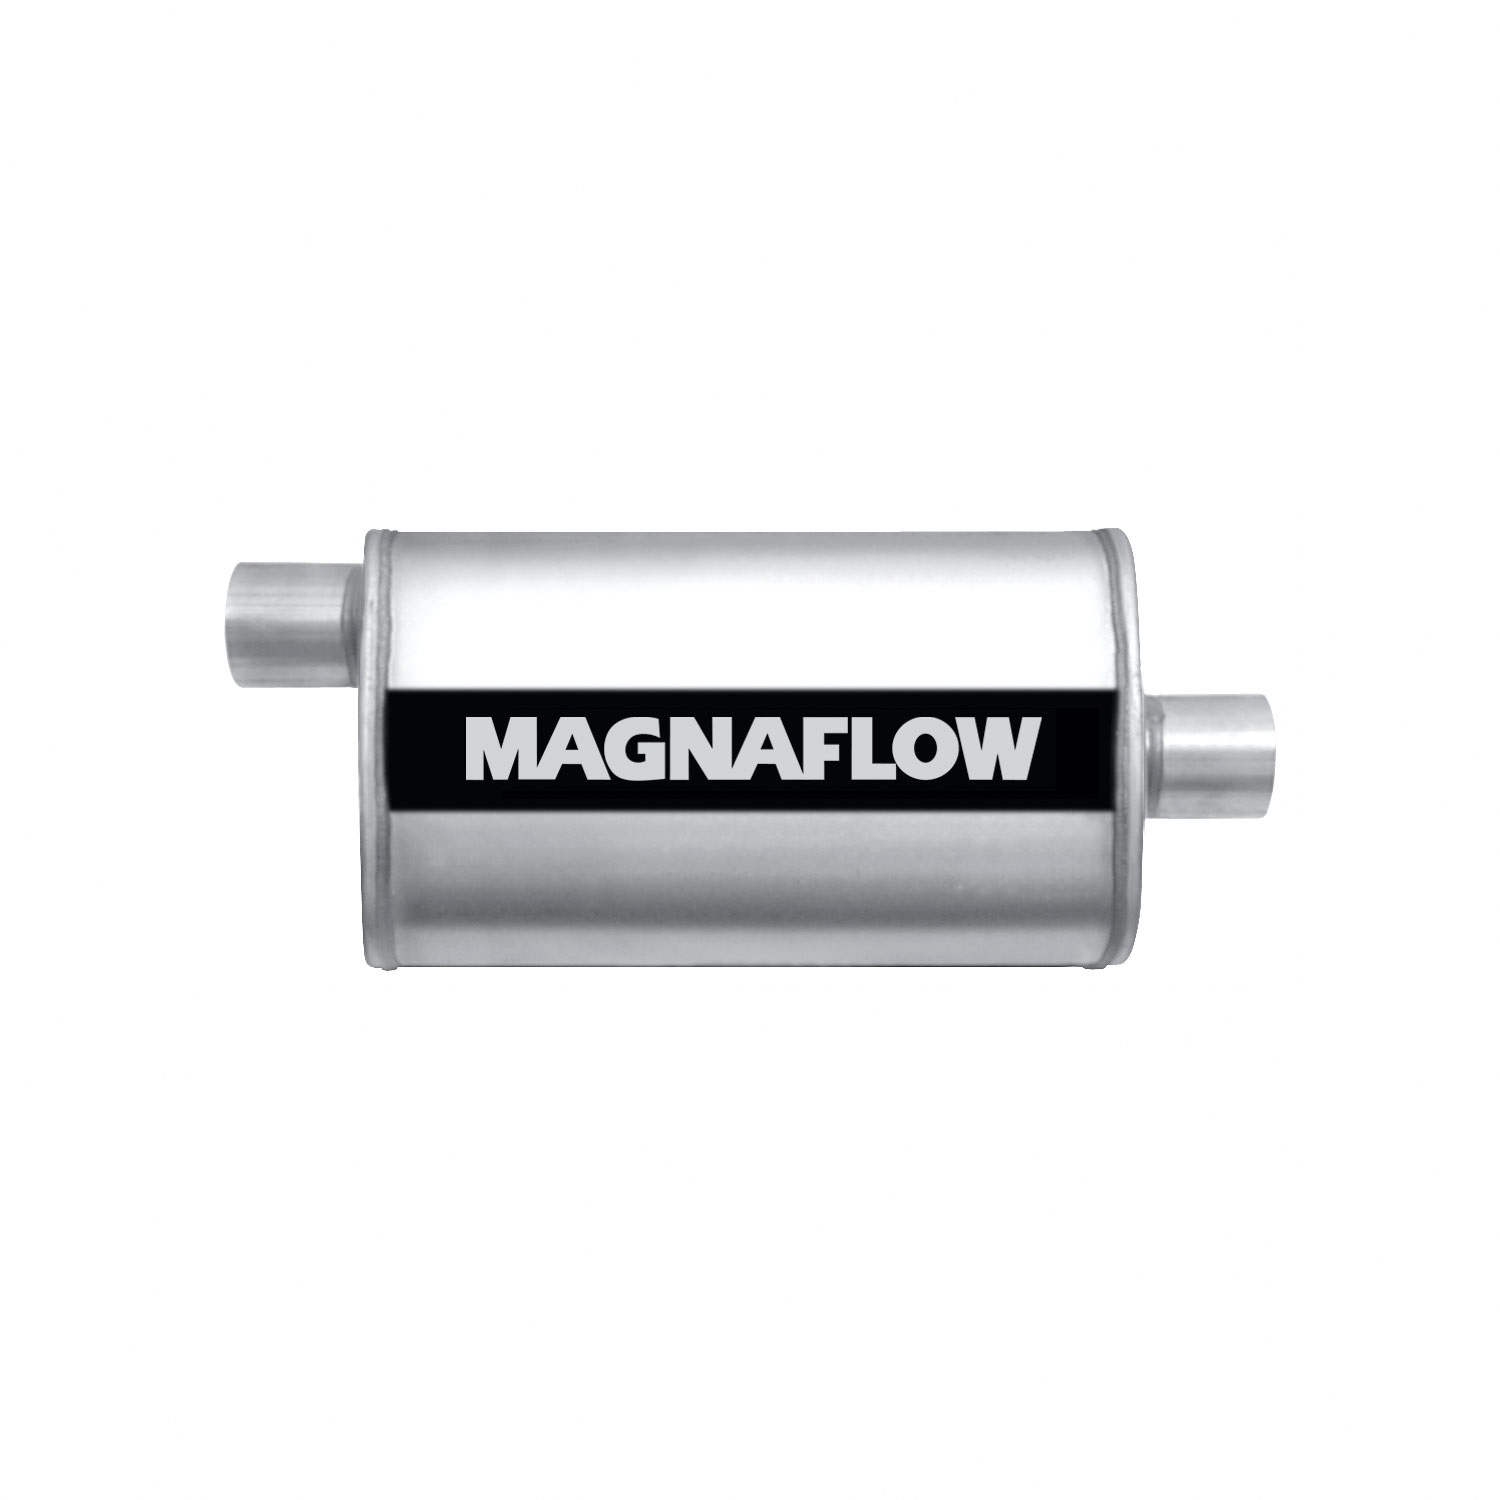 Magnaflow Performance Exhaust Magnaflow Performance Exhaust 11226 Stainless Steel Muffler